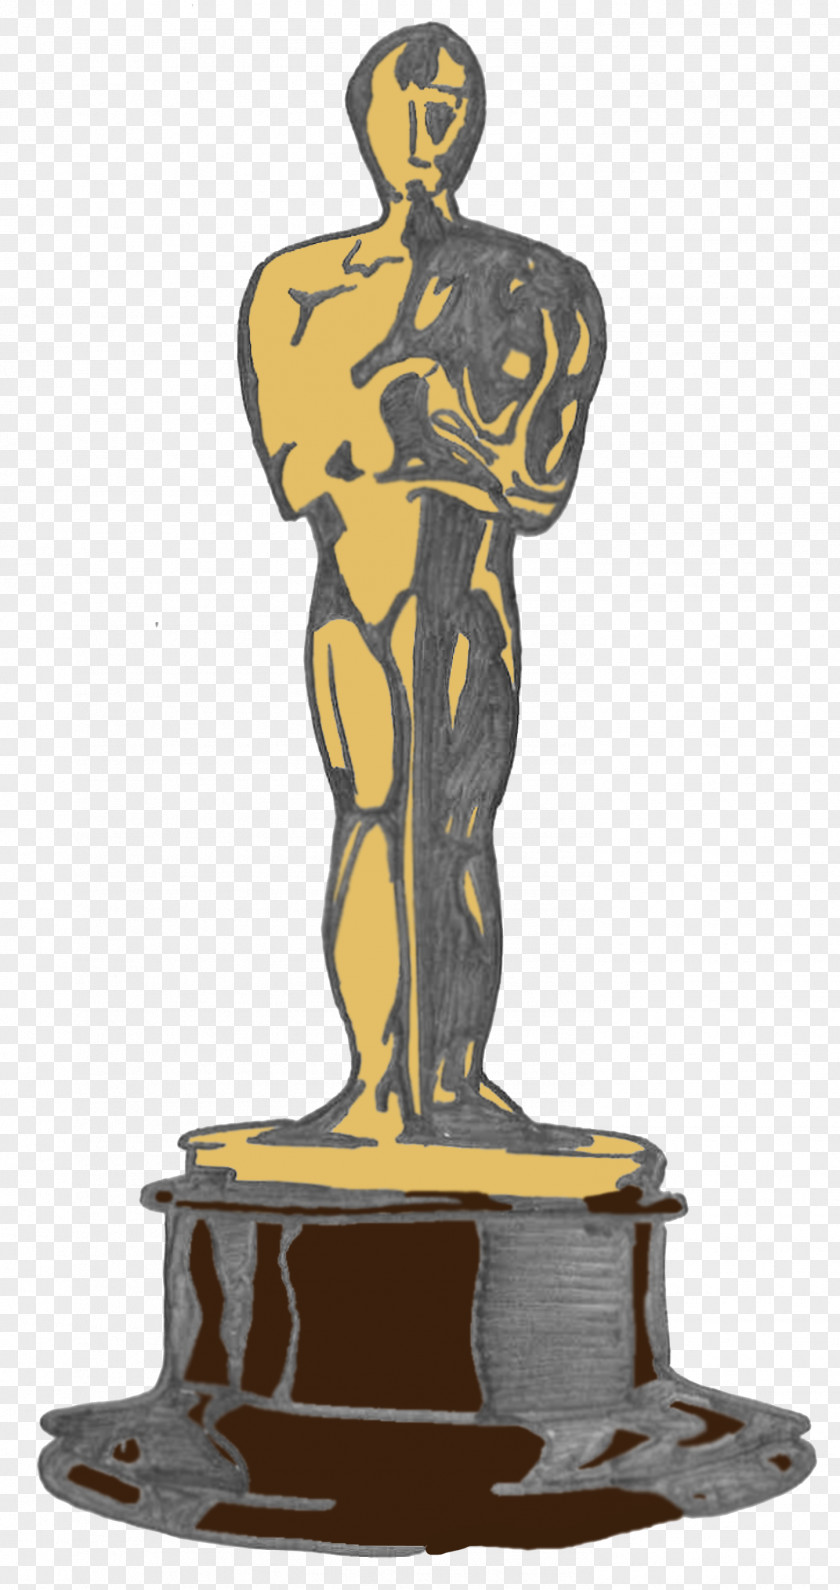 Oscar Statuette Statue Figurine Trophy PNG